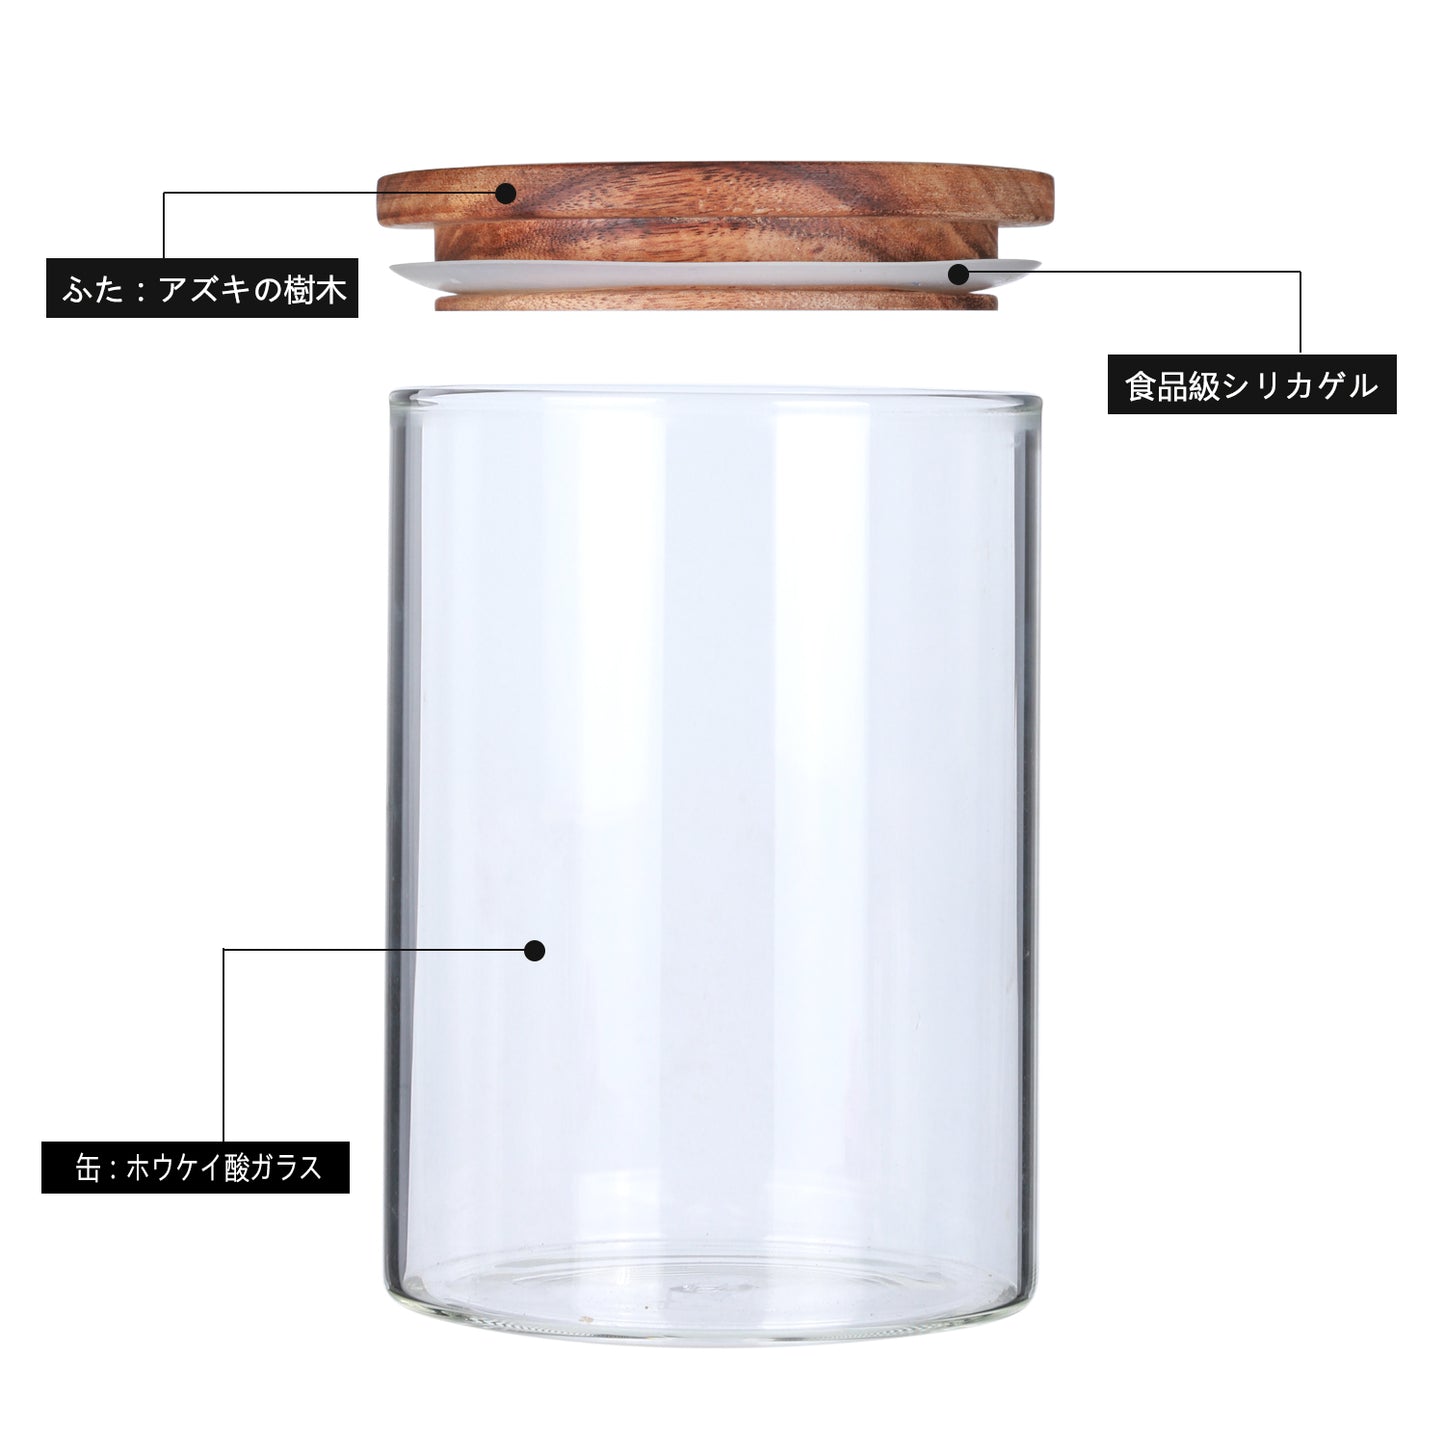 KKC Airtight Glass Loose Tea Storage Holder Container,Glass Storage Jar Containers with Airtight Wood Lids,25 Floz (750 ML)